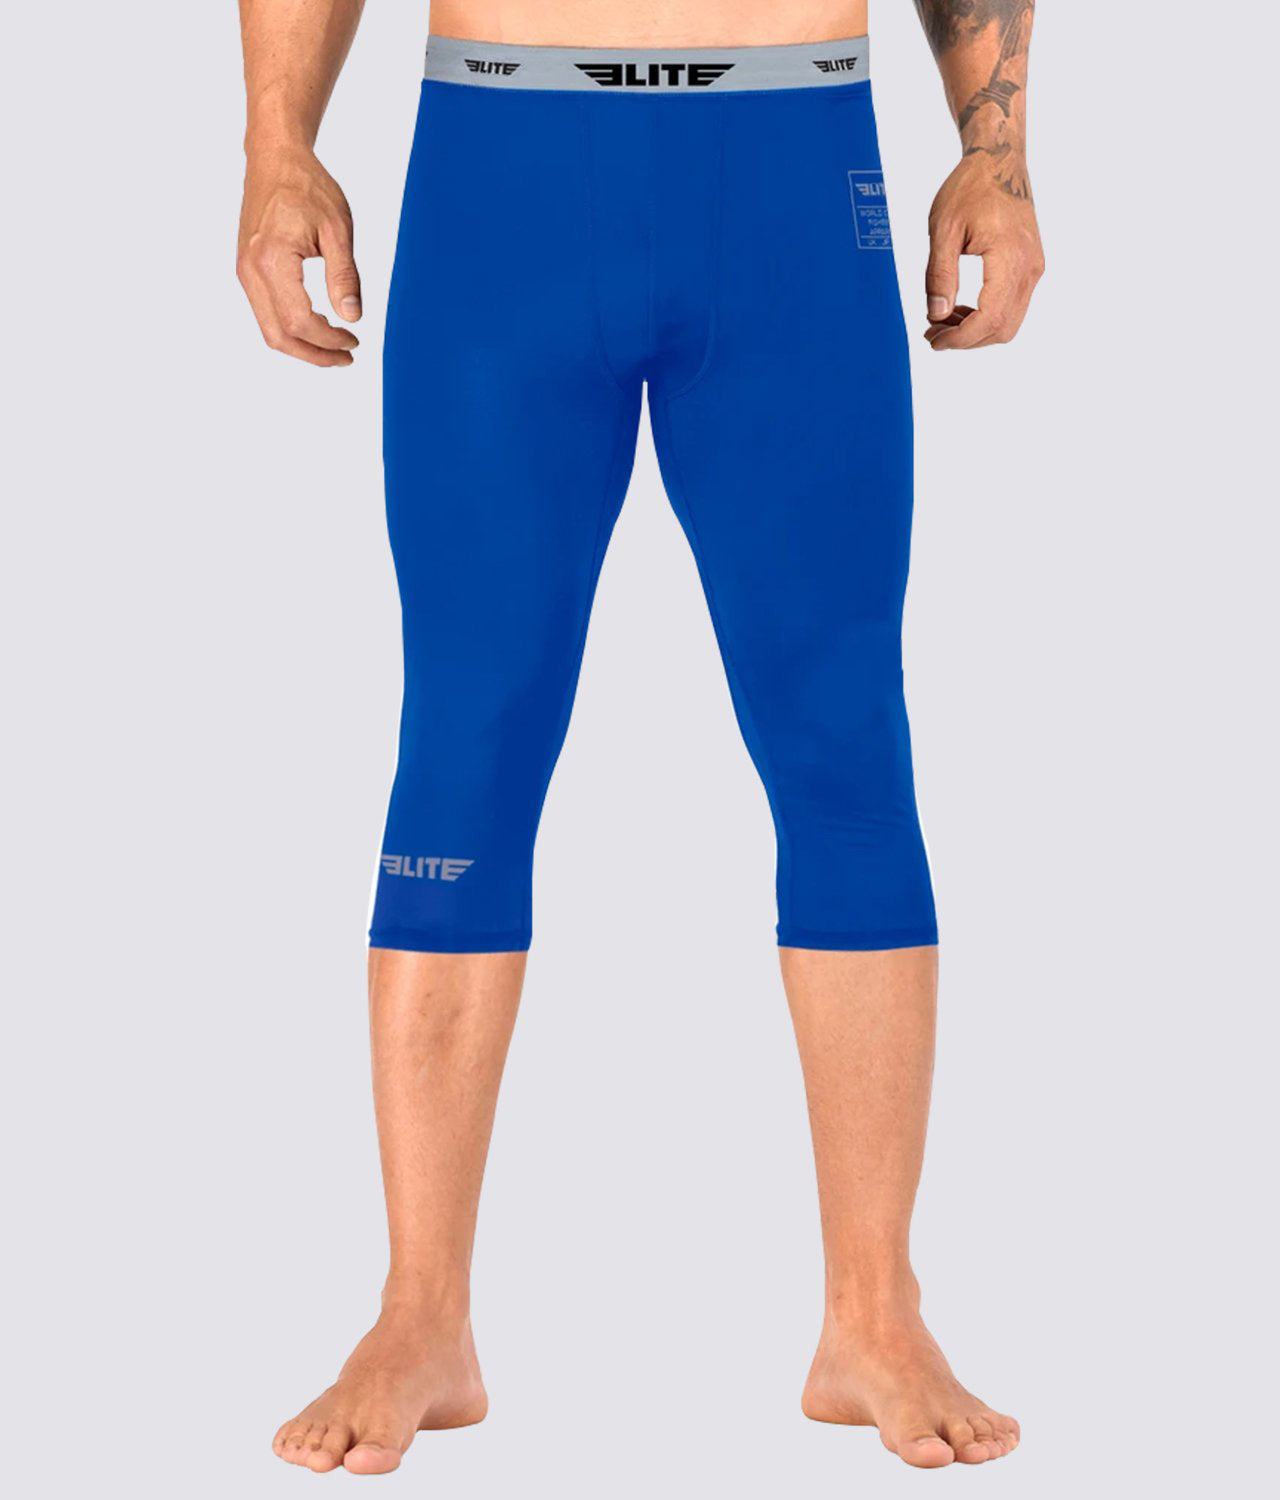 Men's Three Quarter Blue Compression Muay Thai Spat Pants